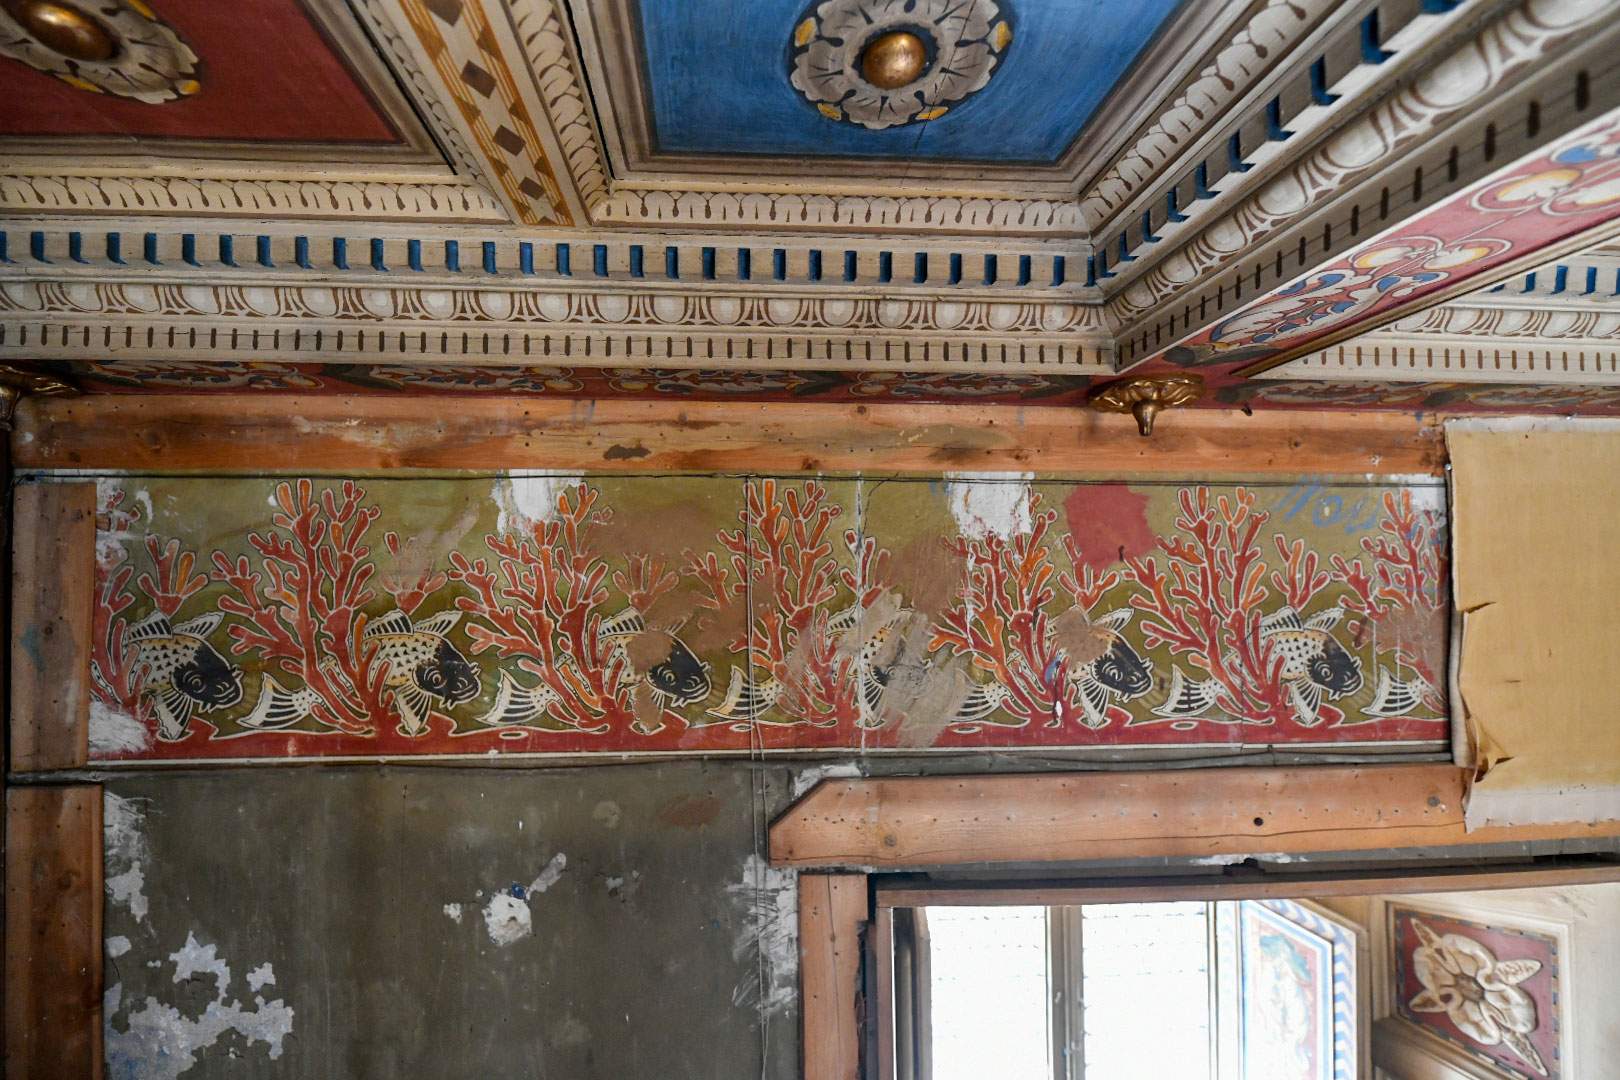 Splendid discovery at Villa Puccini in Torre del Lago: decorative cycle resurfaces